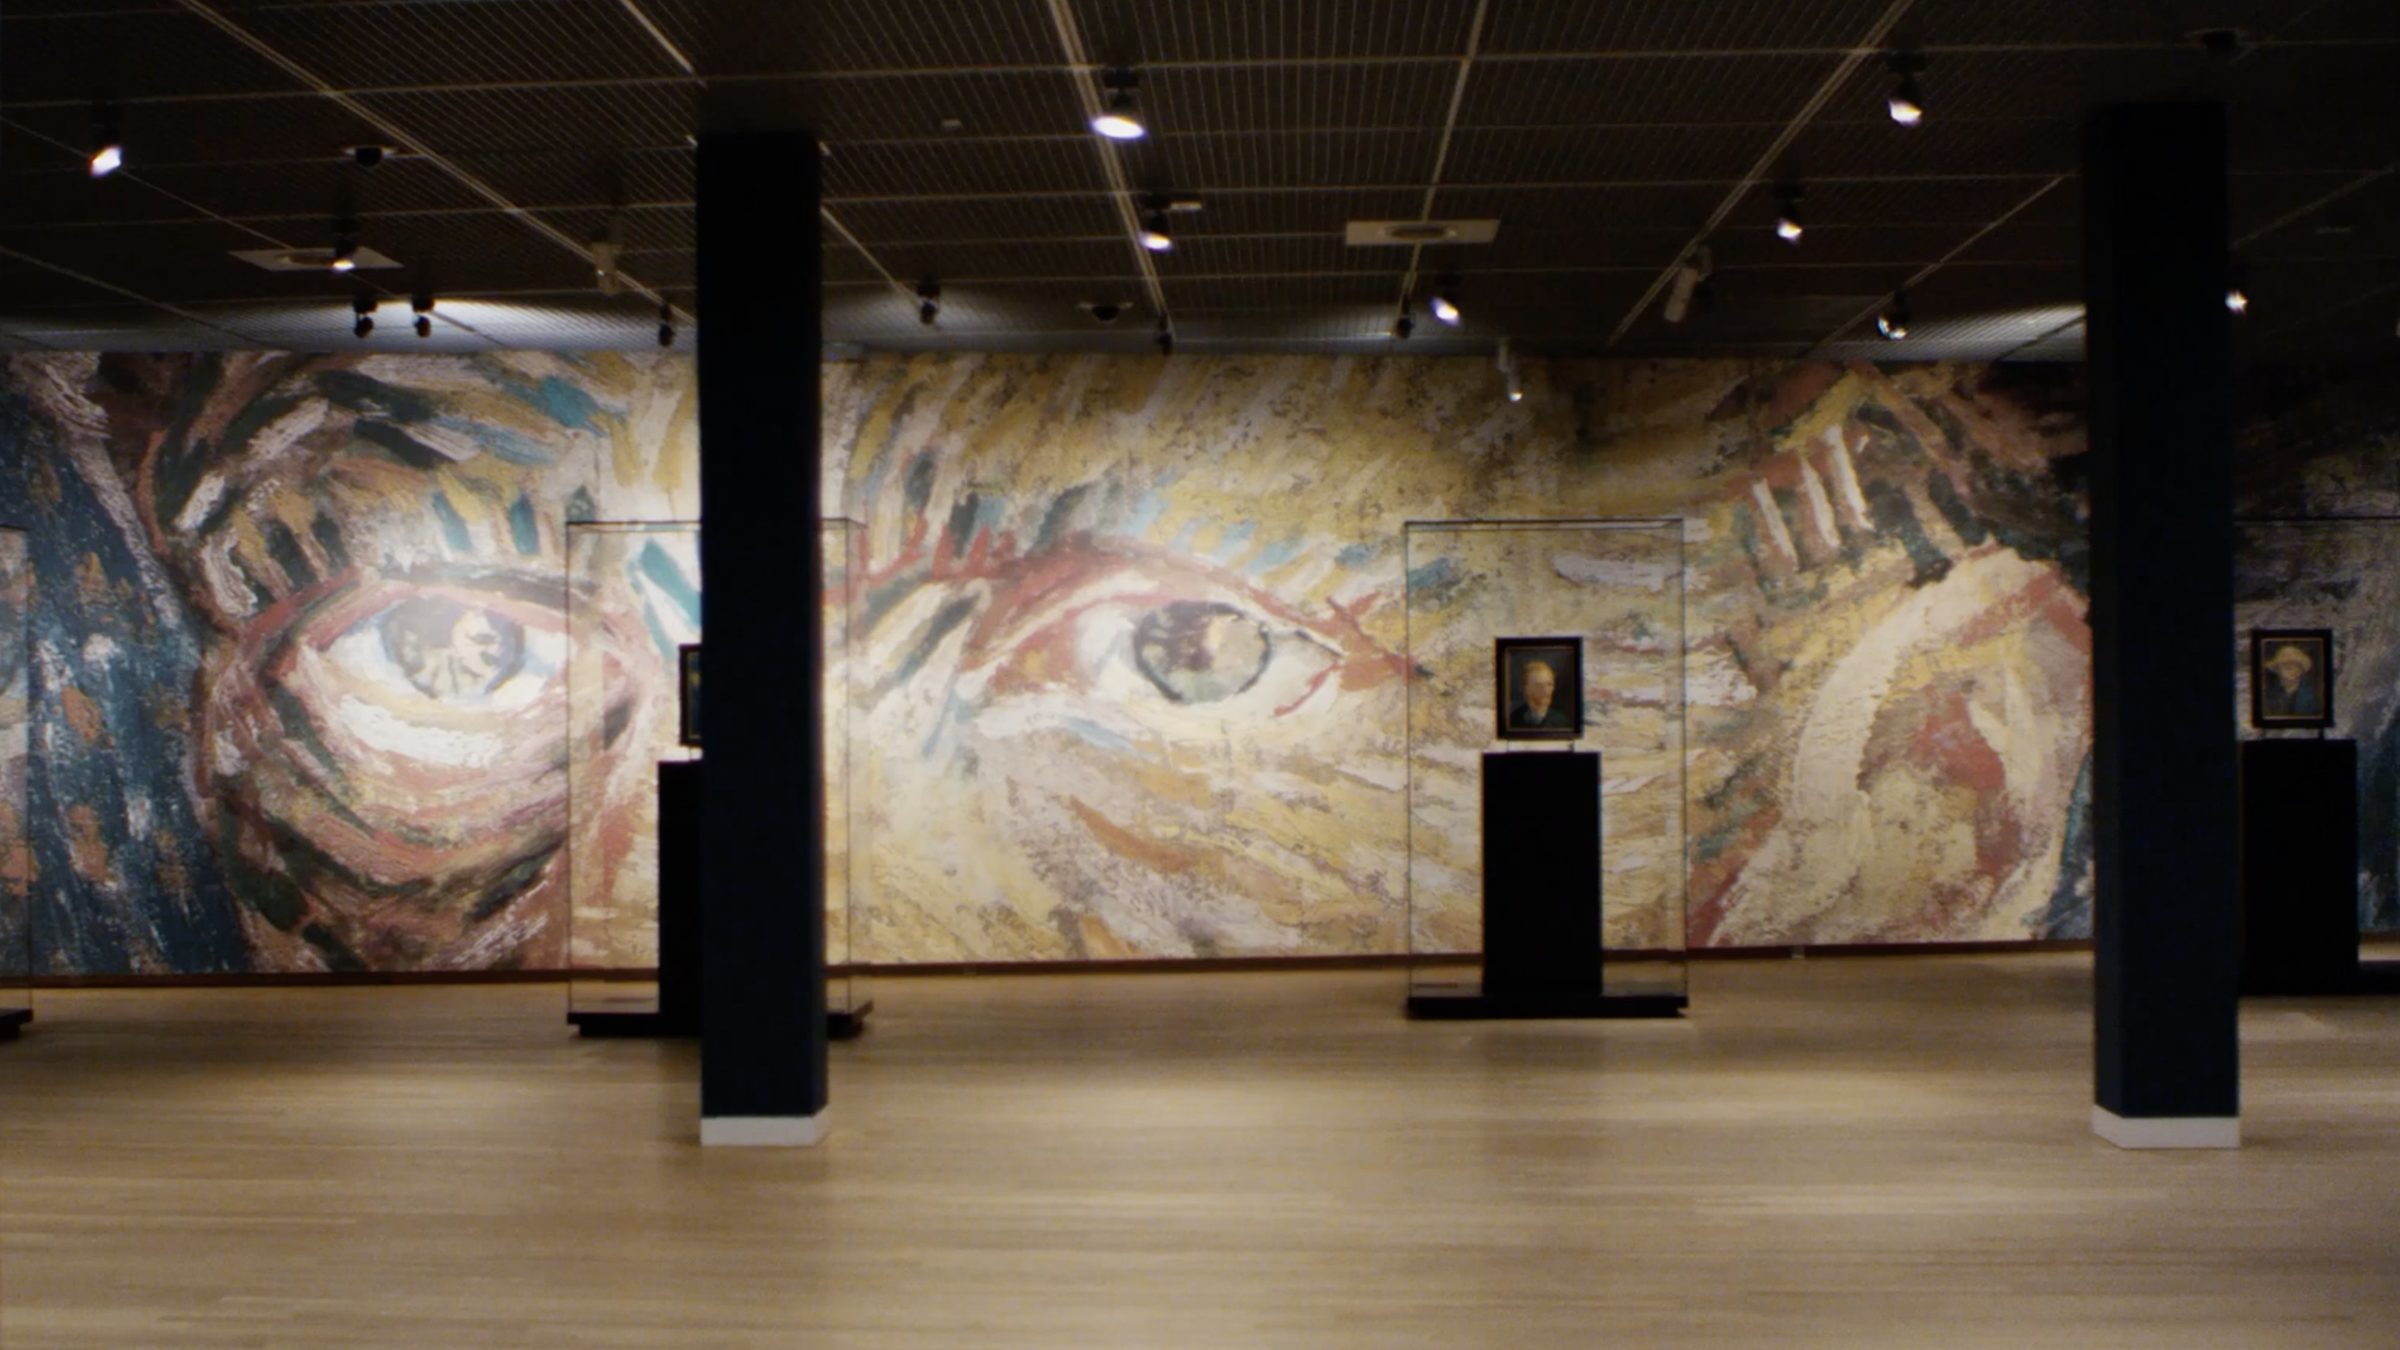 virtual tour van gogh museum amsterdam